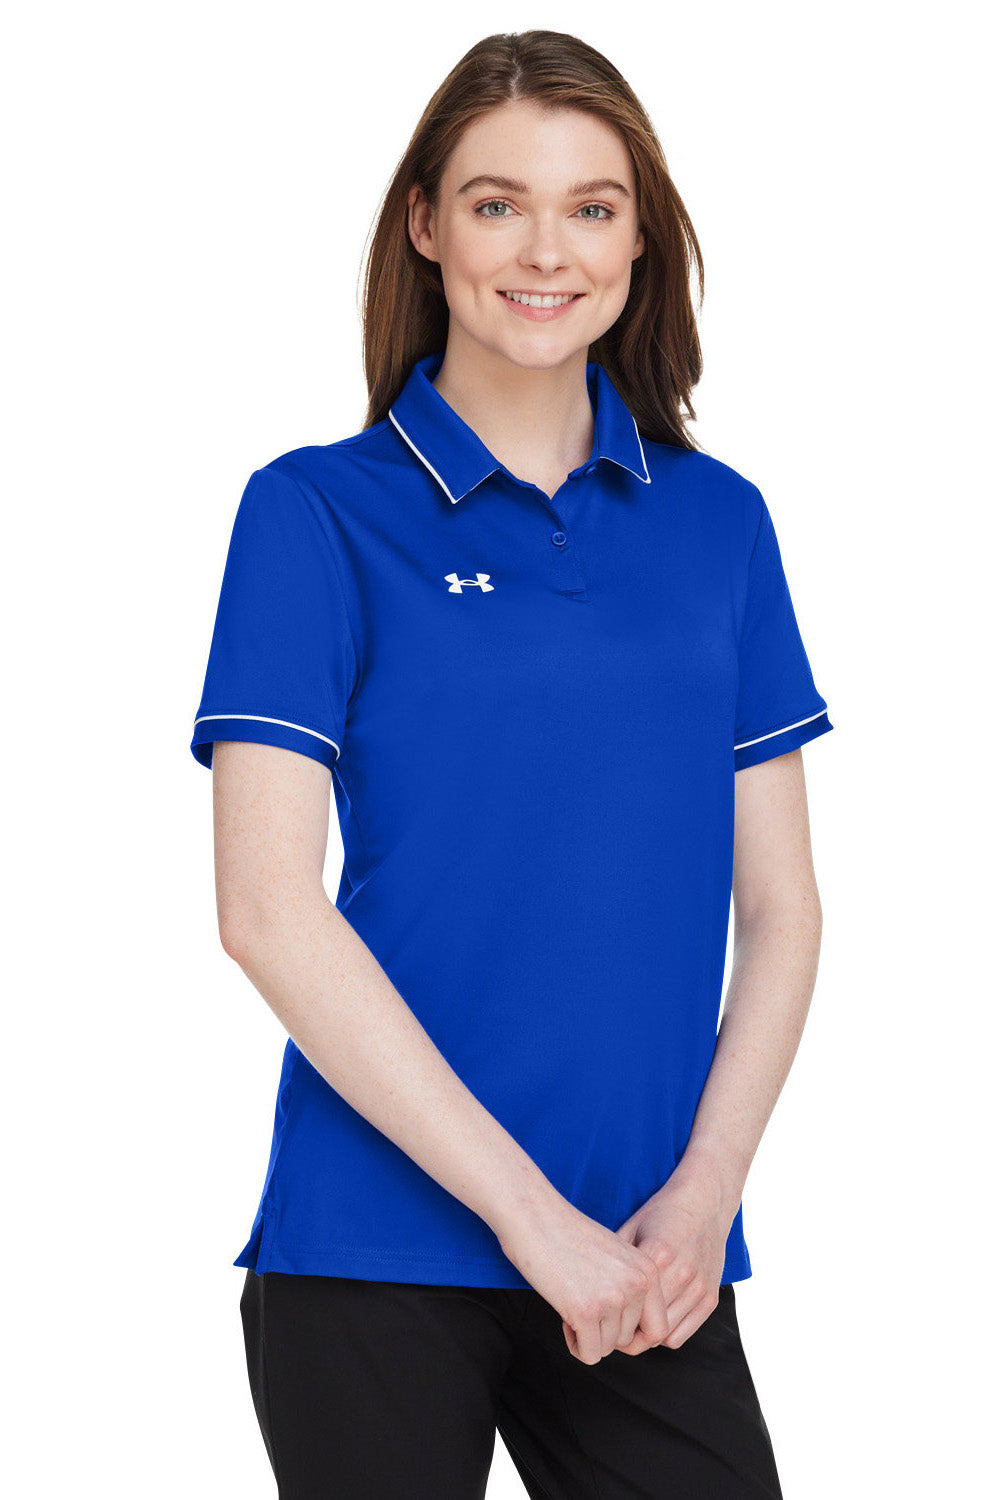 Under Armour 1376905 Womens Teams Performance Moisture Wicking Short Sleeve Polo Shirt Royal Blue Model 3Q